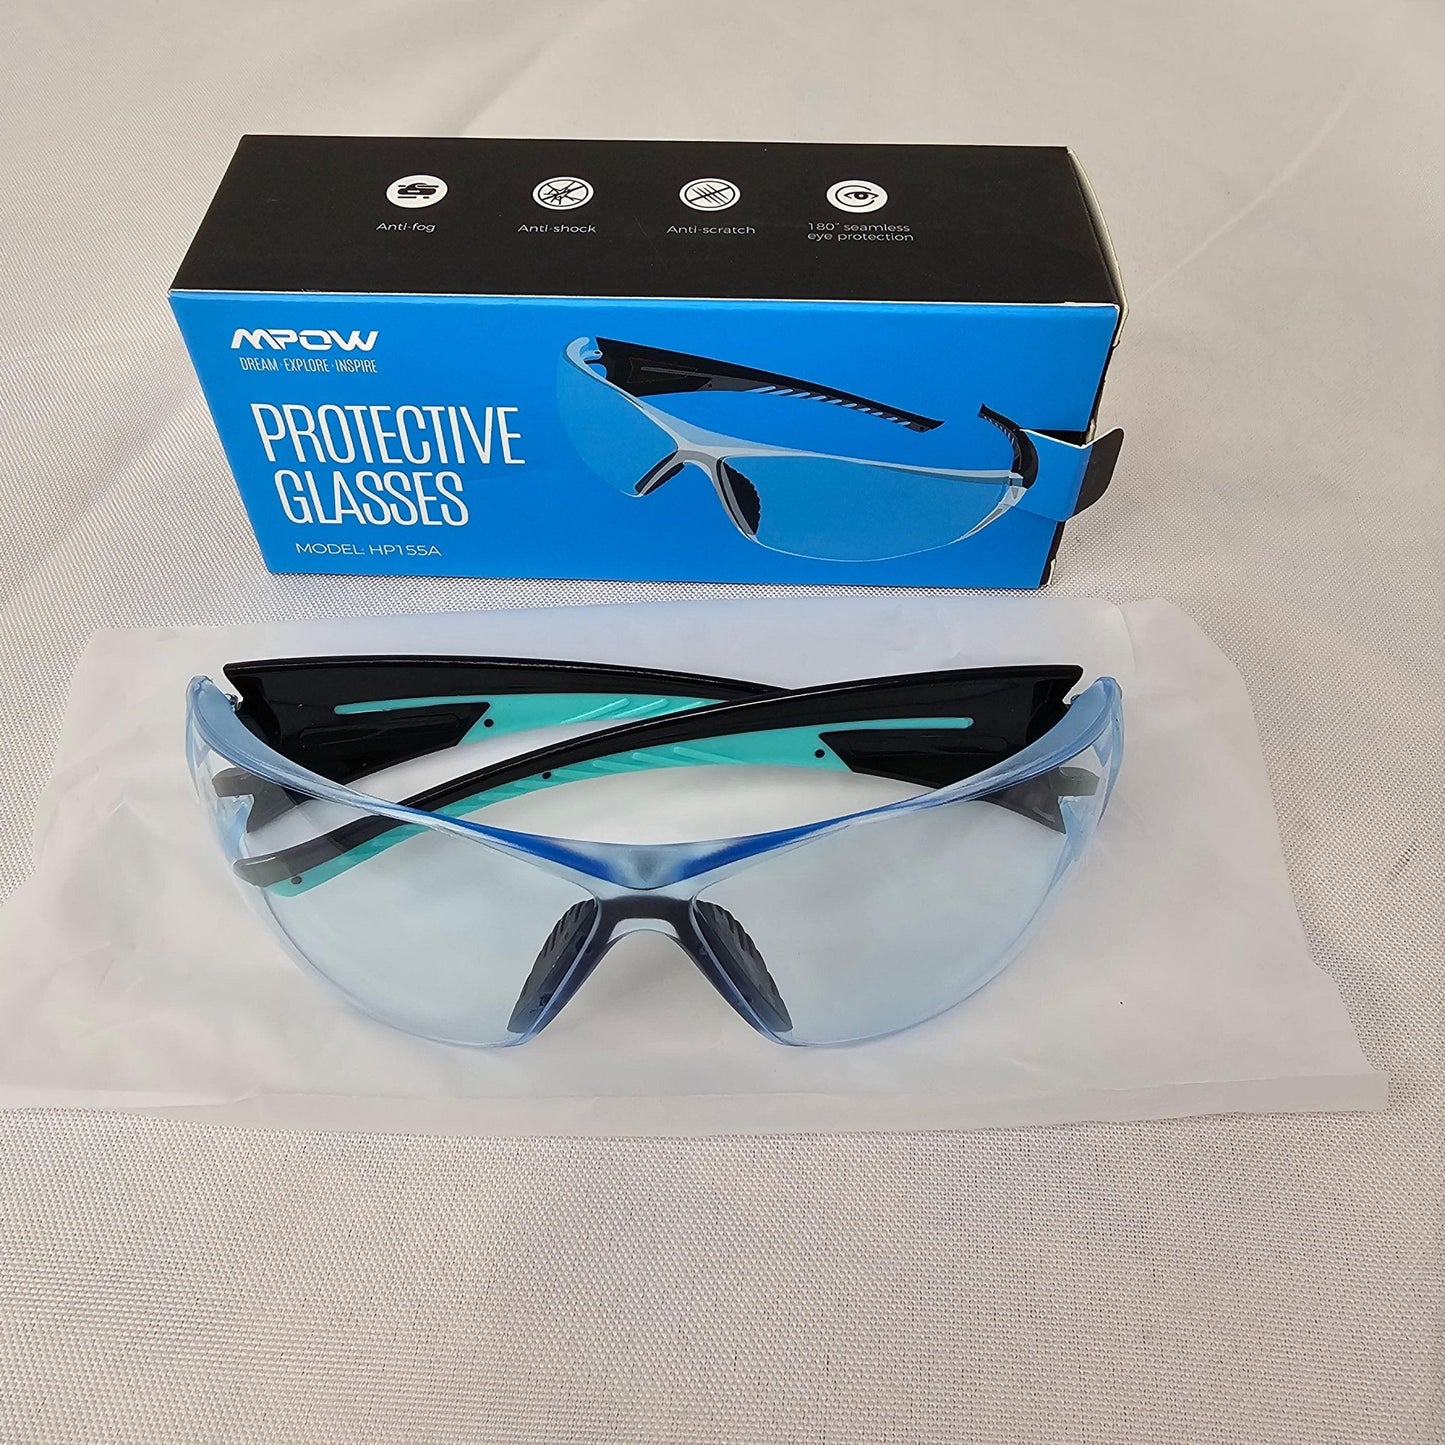 Protective Glasses - Anti-Fog, Anti-Shock, 180° Eye Protection - DQ Distribution